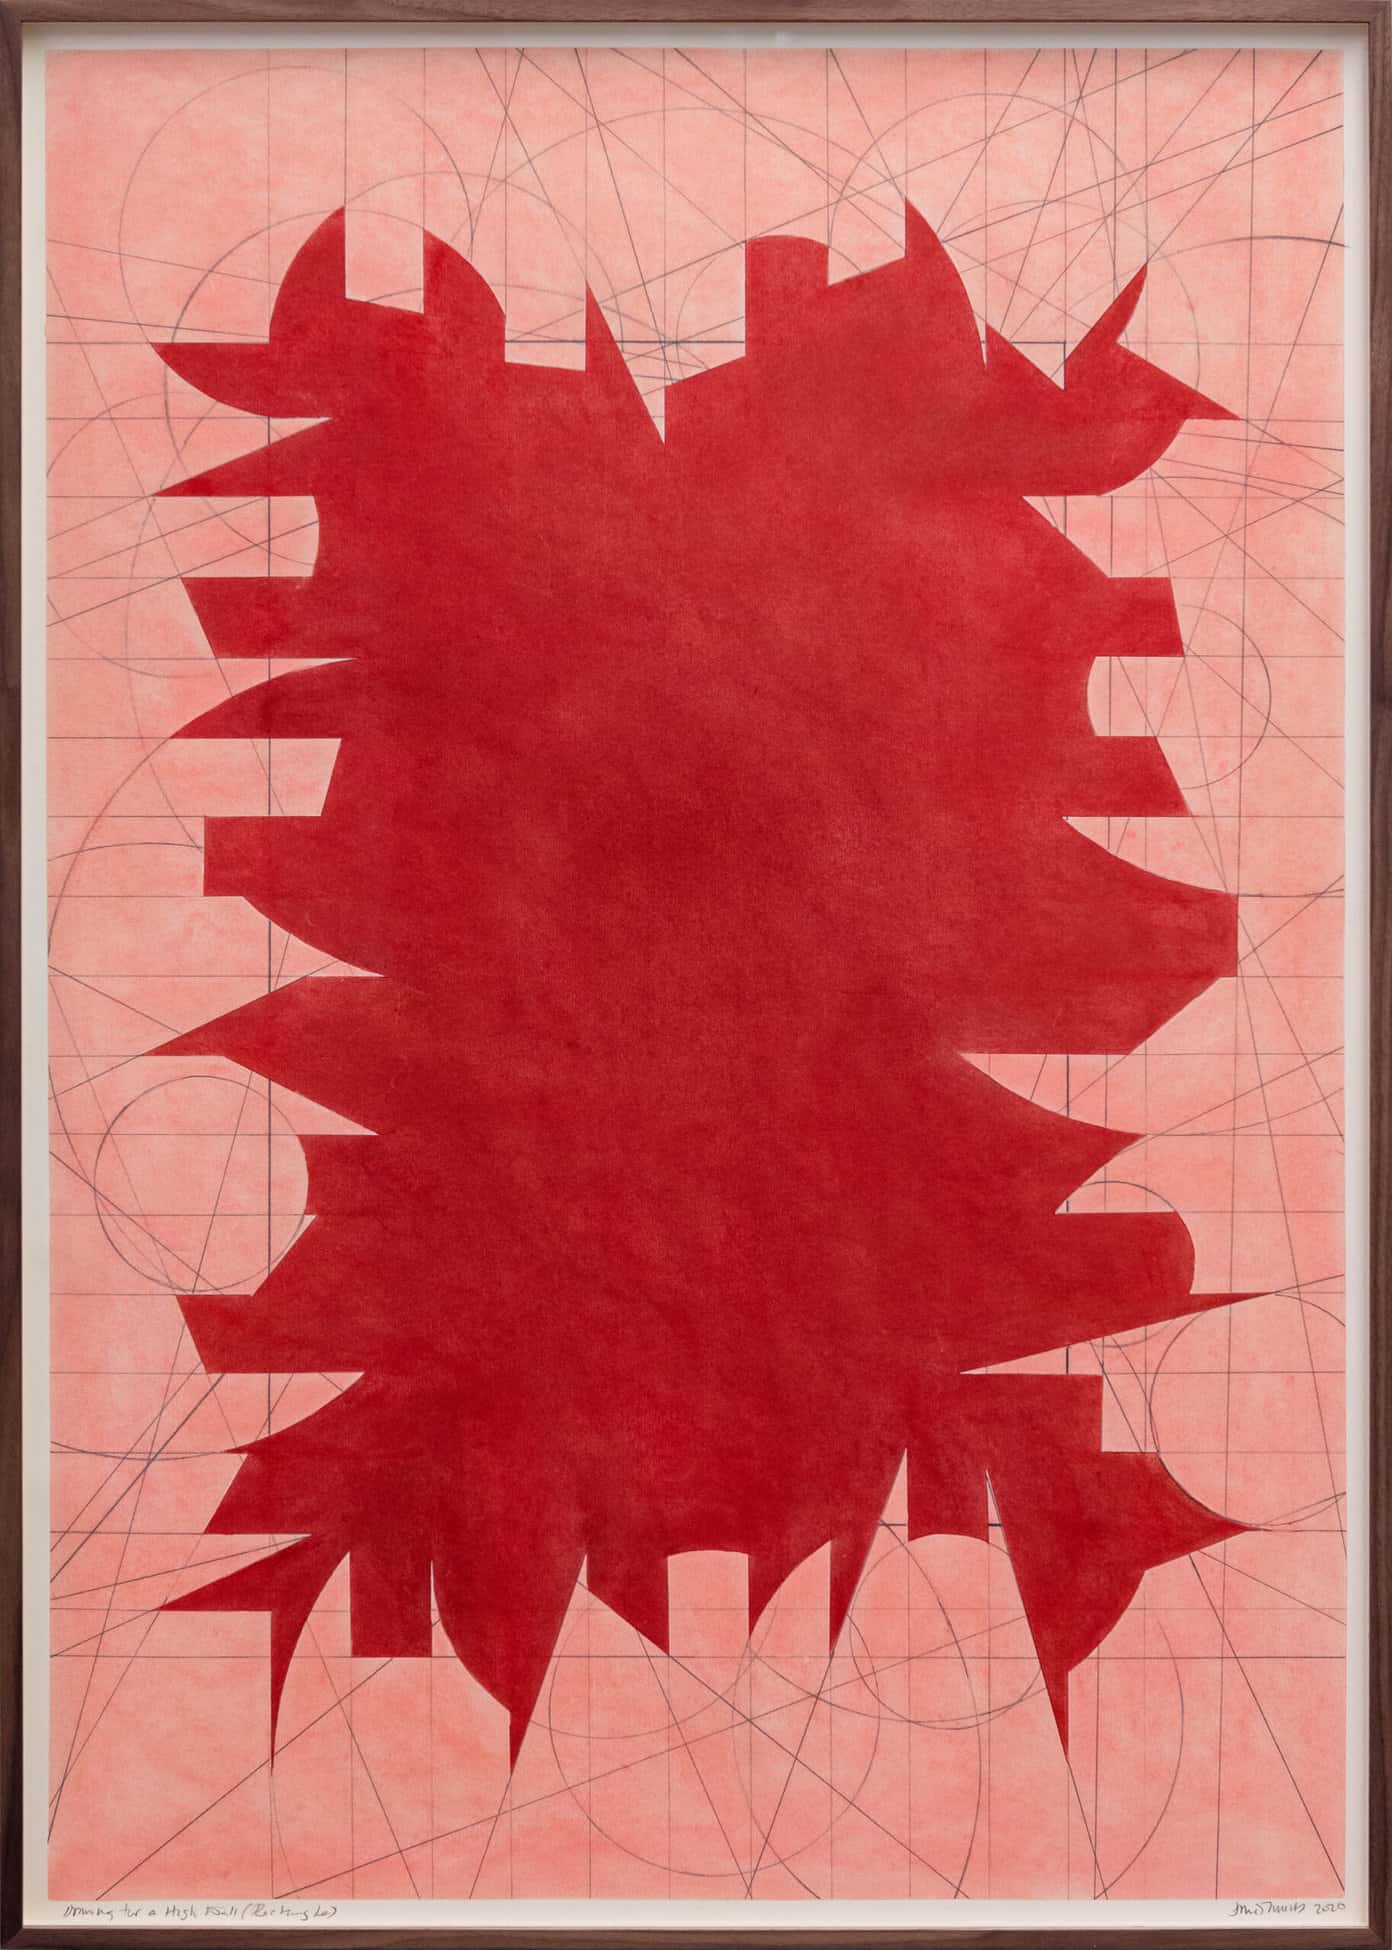 David Tremlett, Drawing for a High Wall (Rectangle), 2020, graphite et pastel sur papier, 54 x 89 cm, courtesy Galleria Studio G7